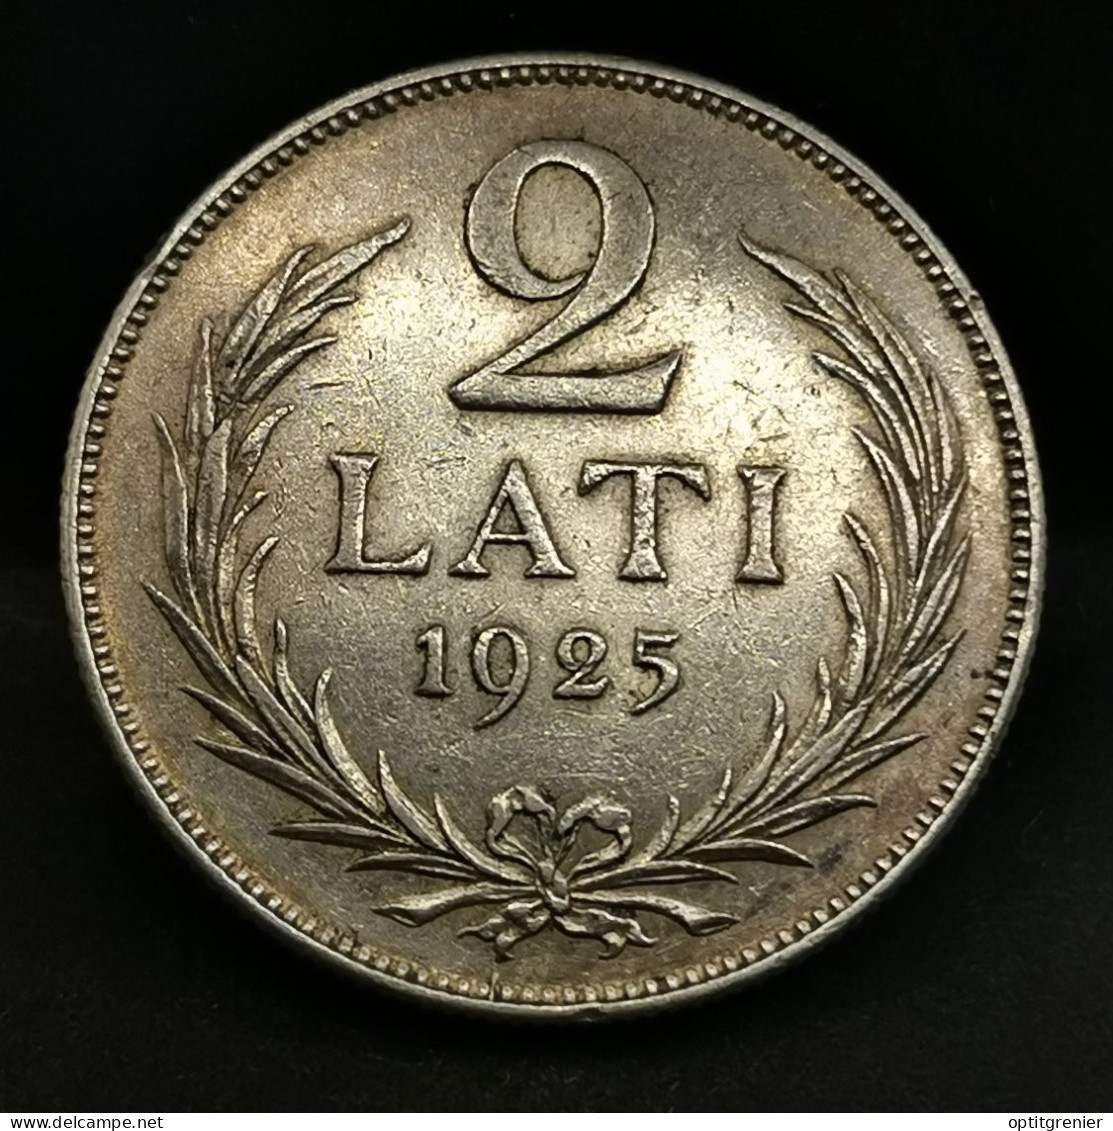 2 LATI 1925 ARGENT LETTONIE / SILVER - Lettonie